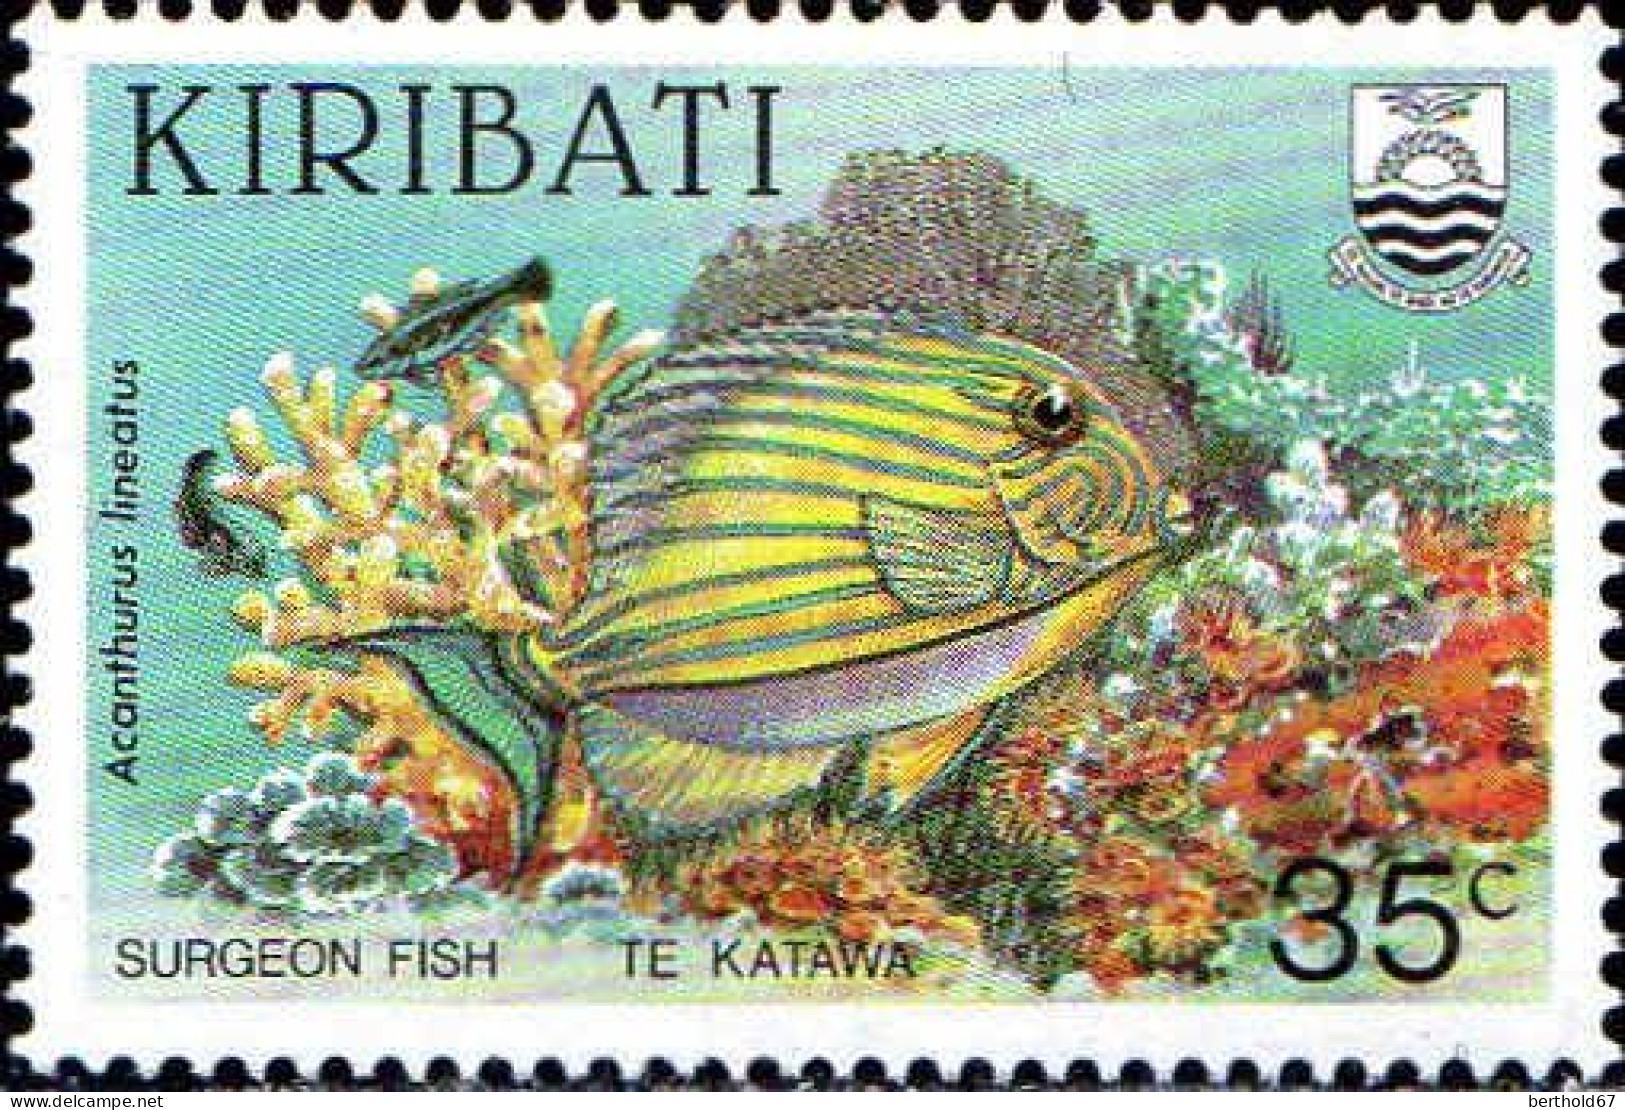 Kiribati Poste N** Yv:130/133 Faune Des Récifs Coralliens - Meereswelt